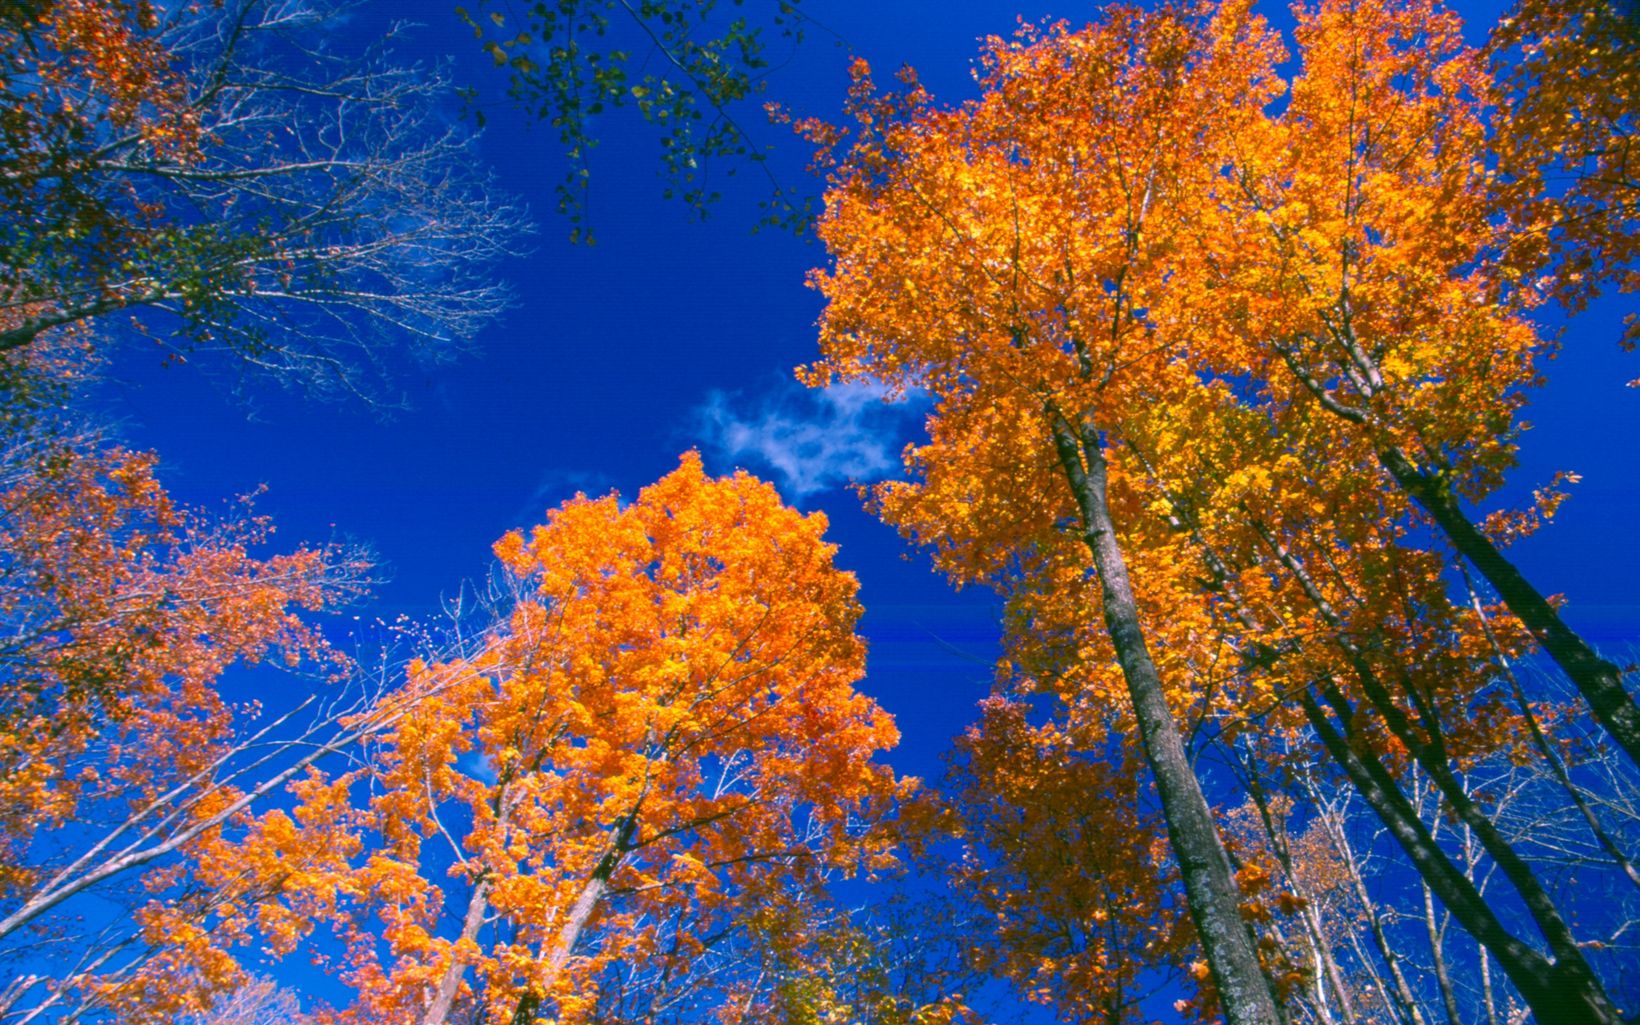 Bright orange leaves against a blue sky.